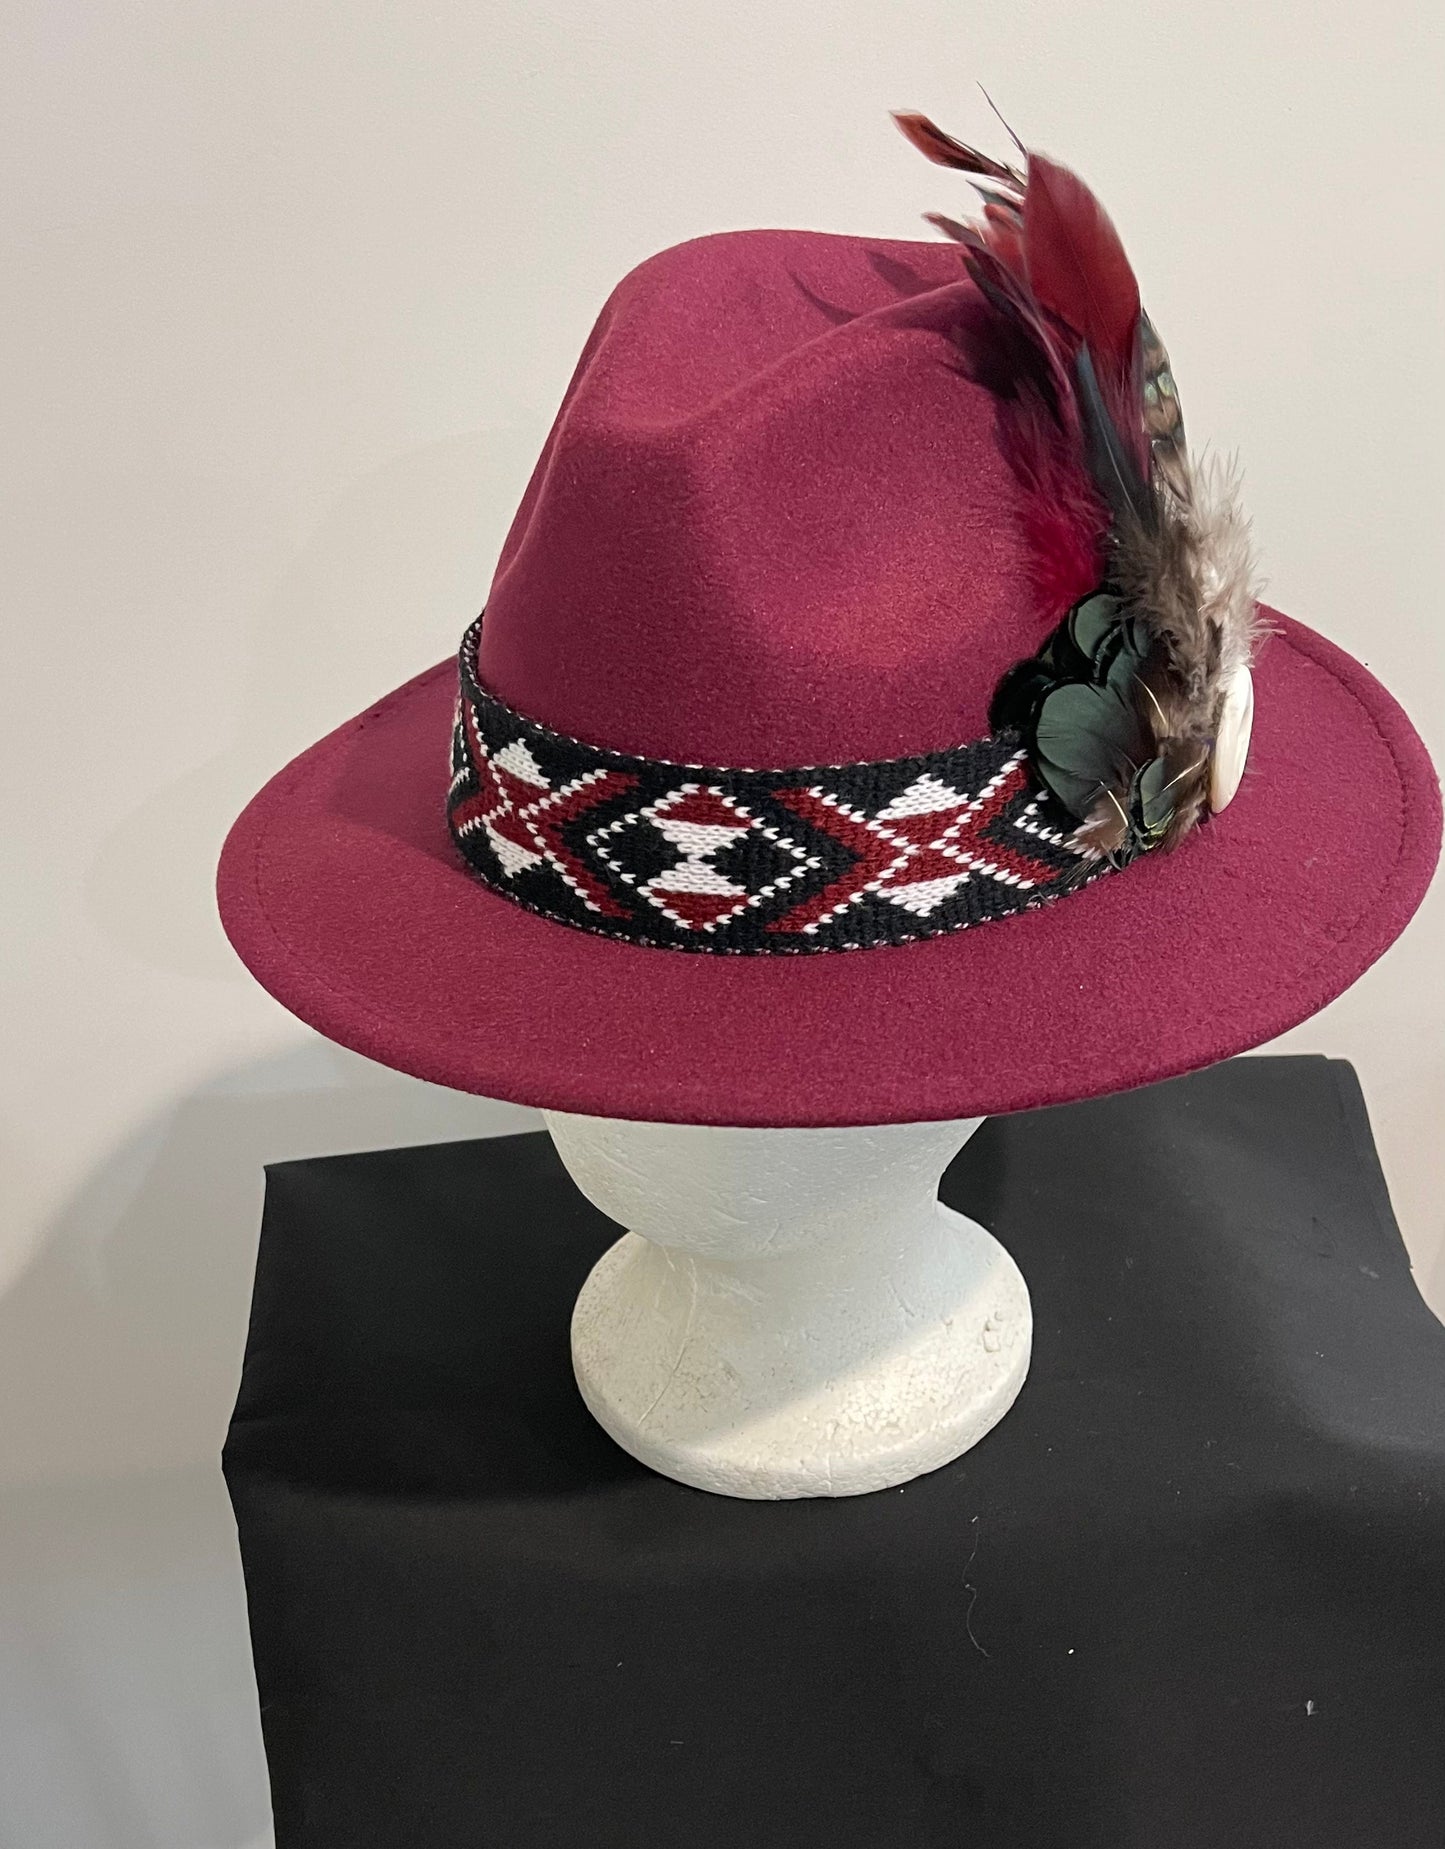 Potae - Maroon Fedora Felt Hat